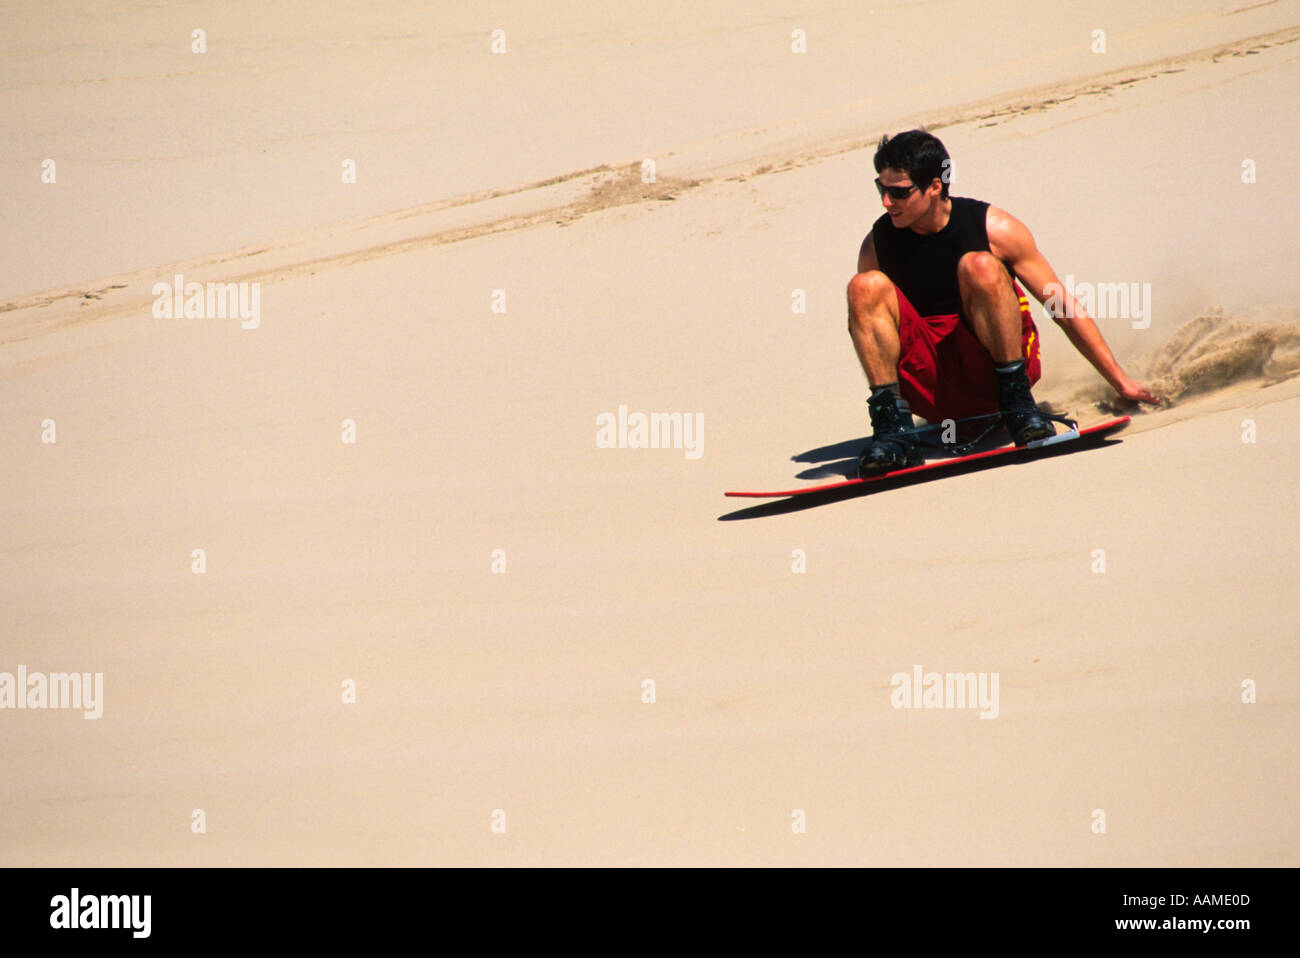 sandboarding Stock Photo